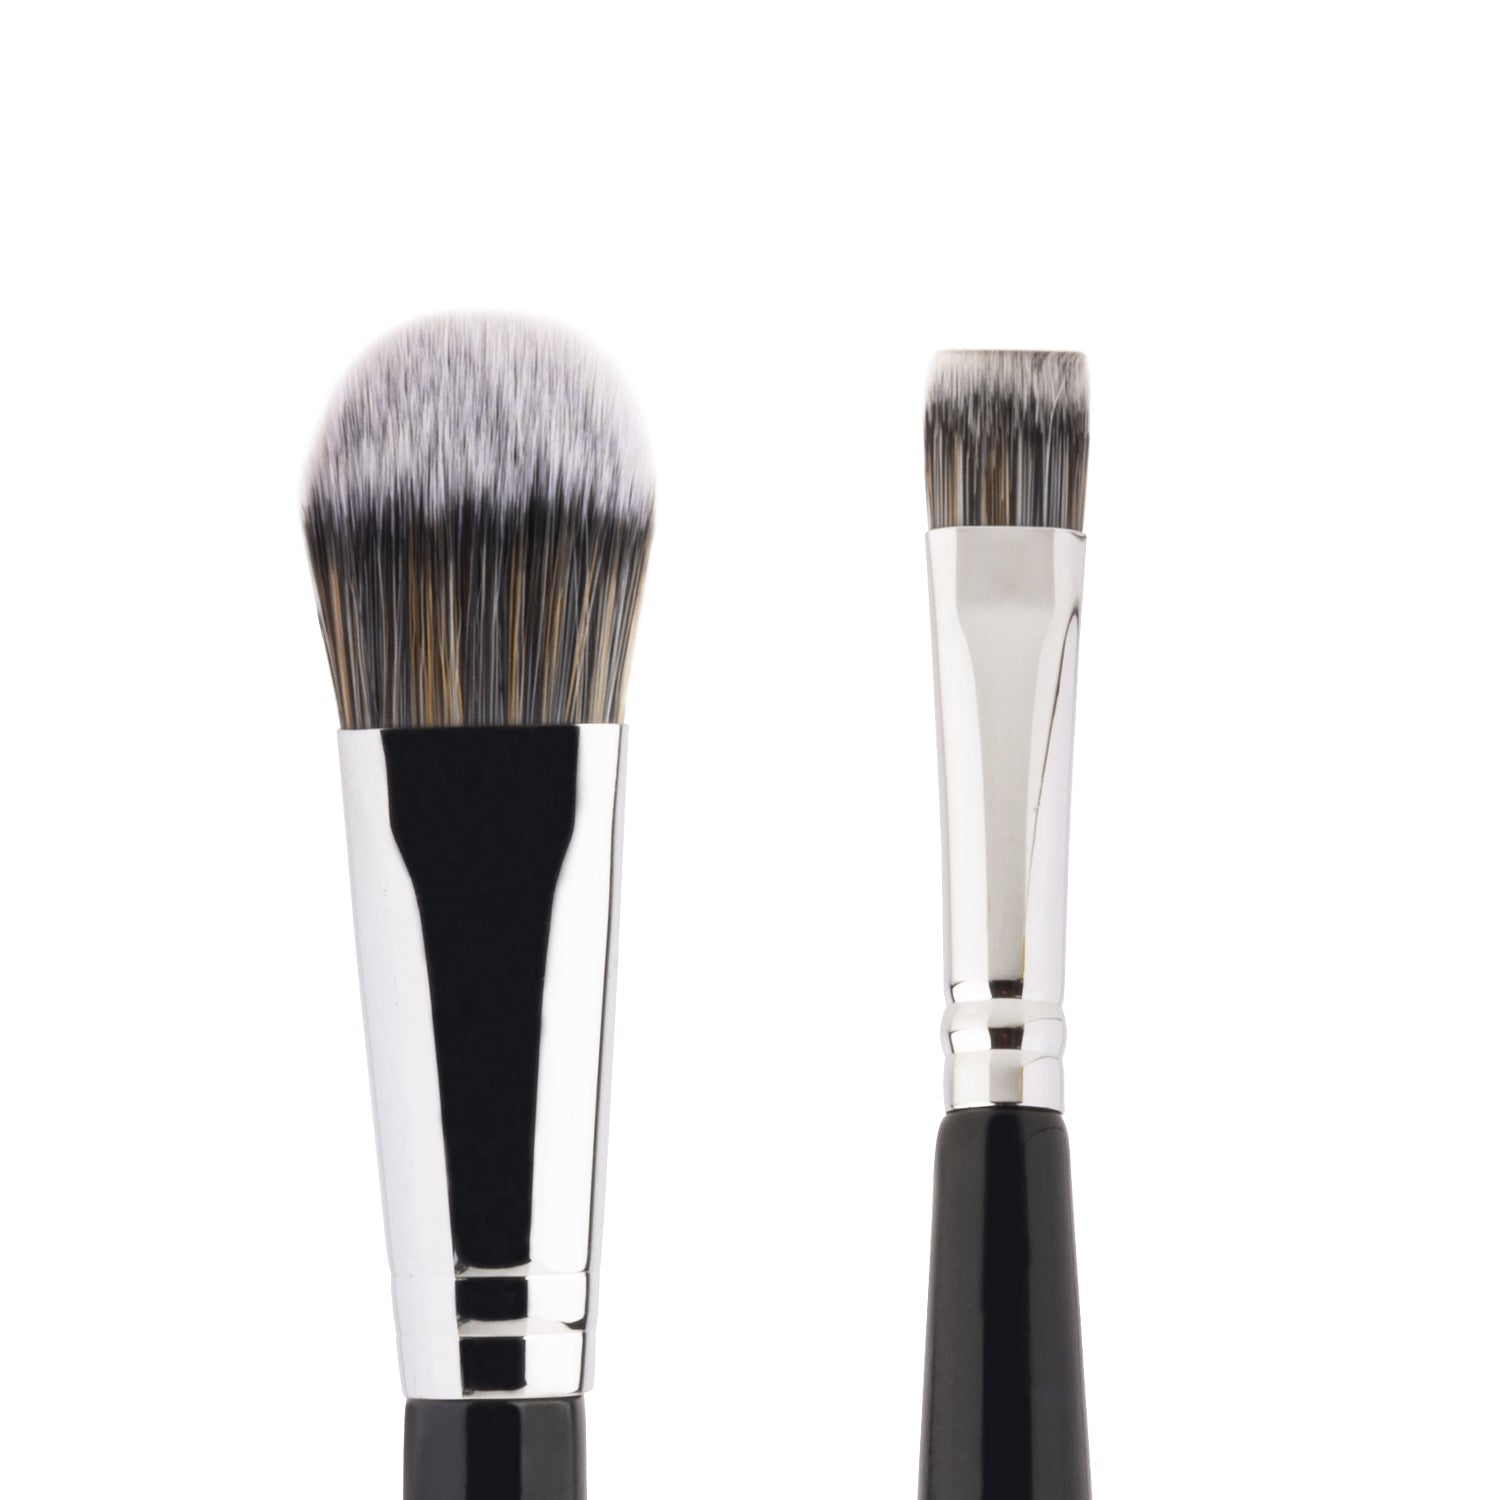 PAC Cosmetics Foundation Application Brush 224